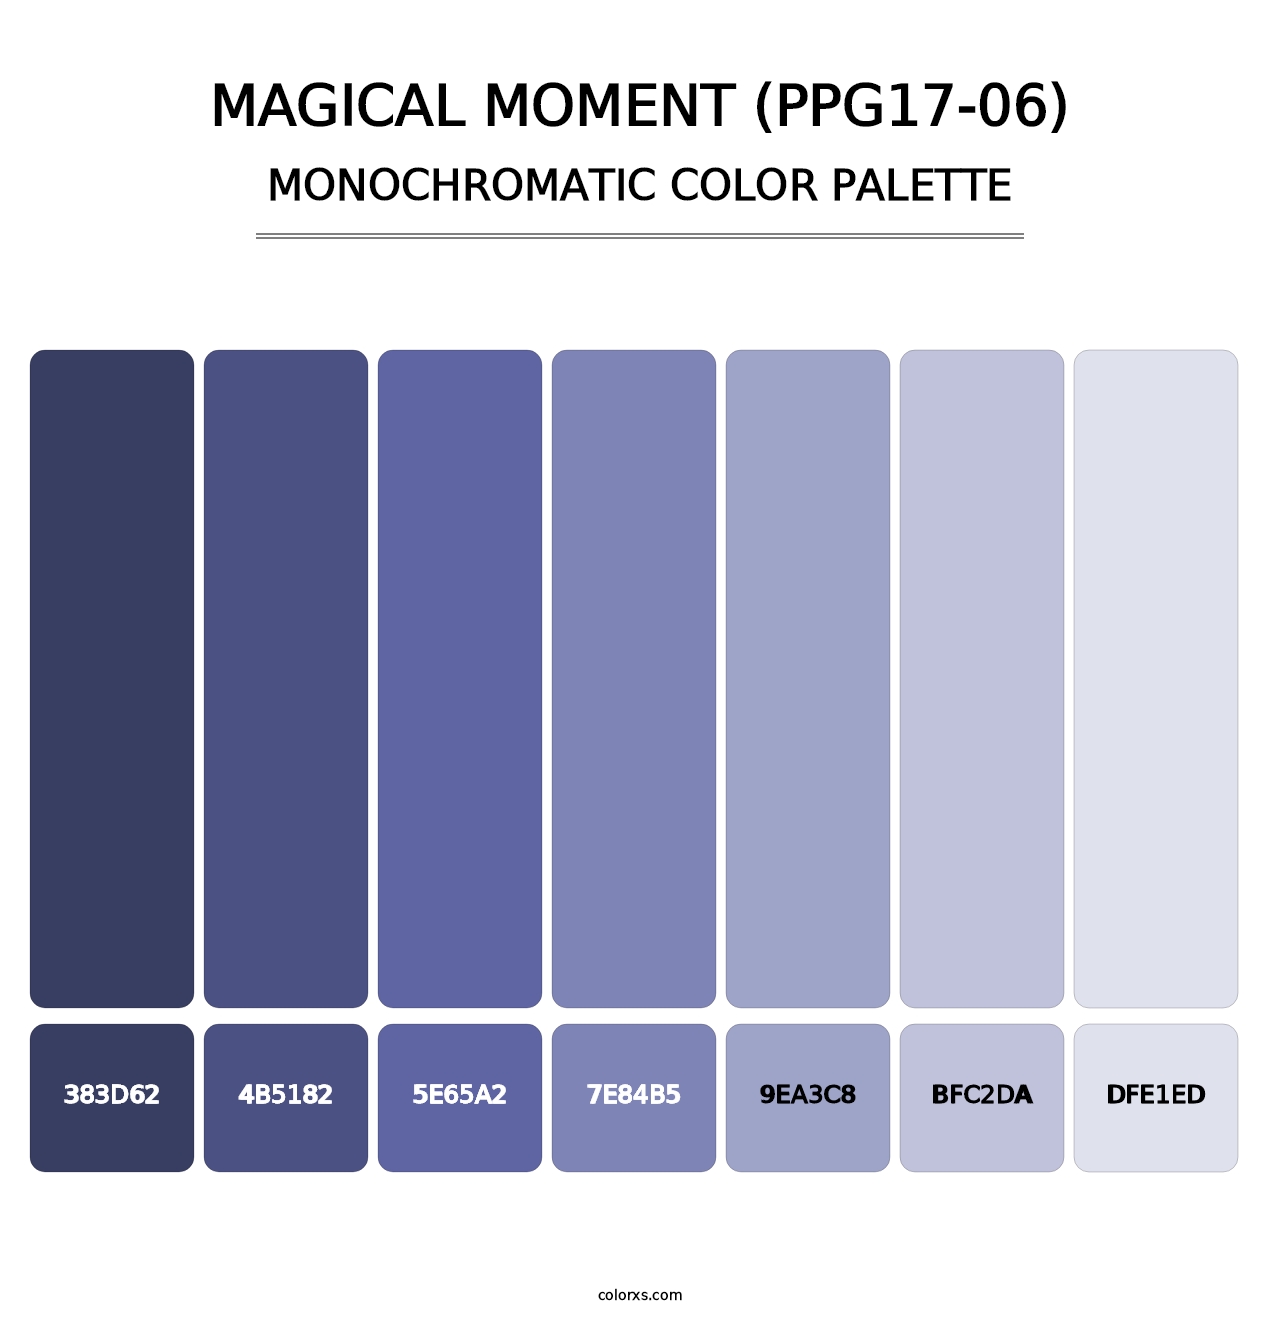 Magical Moment (PPG17-06) - Monochromatic Color Palette